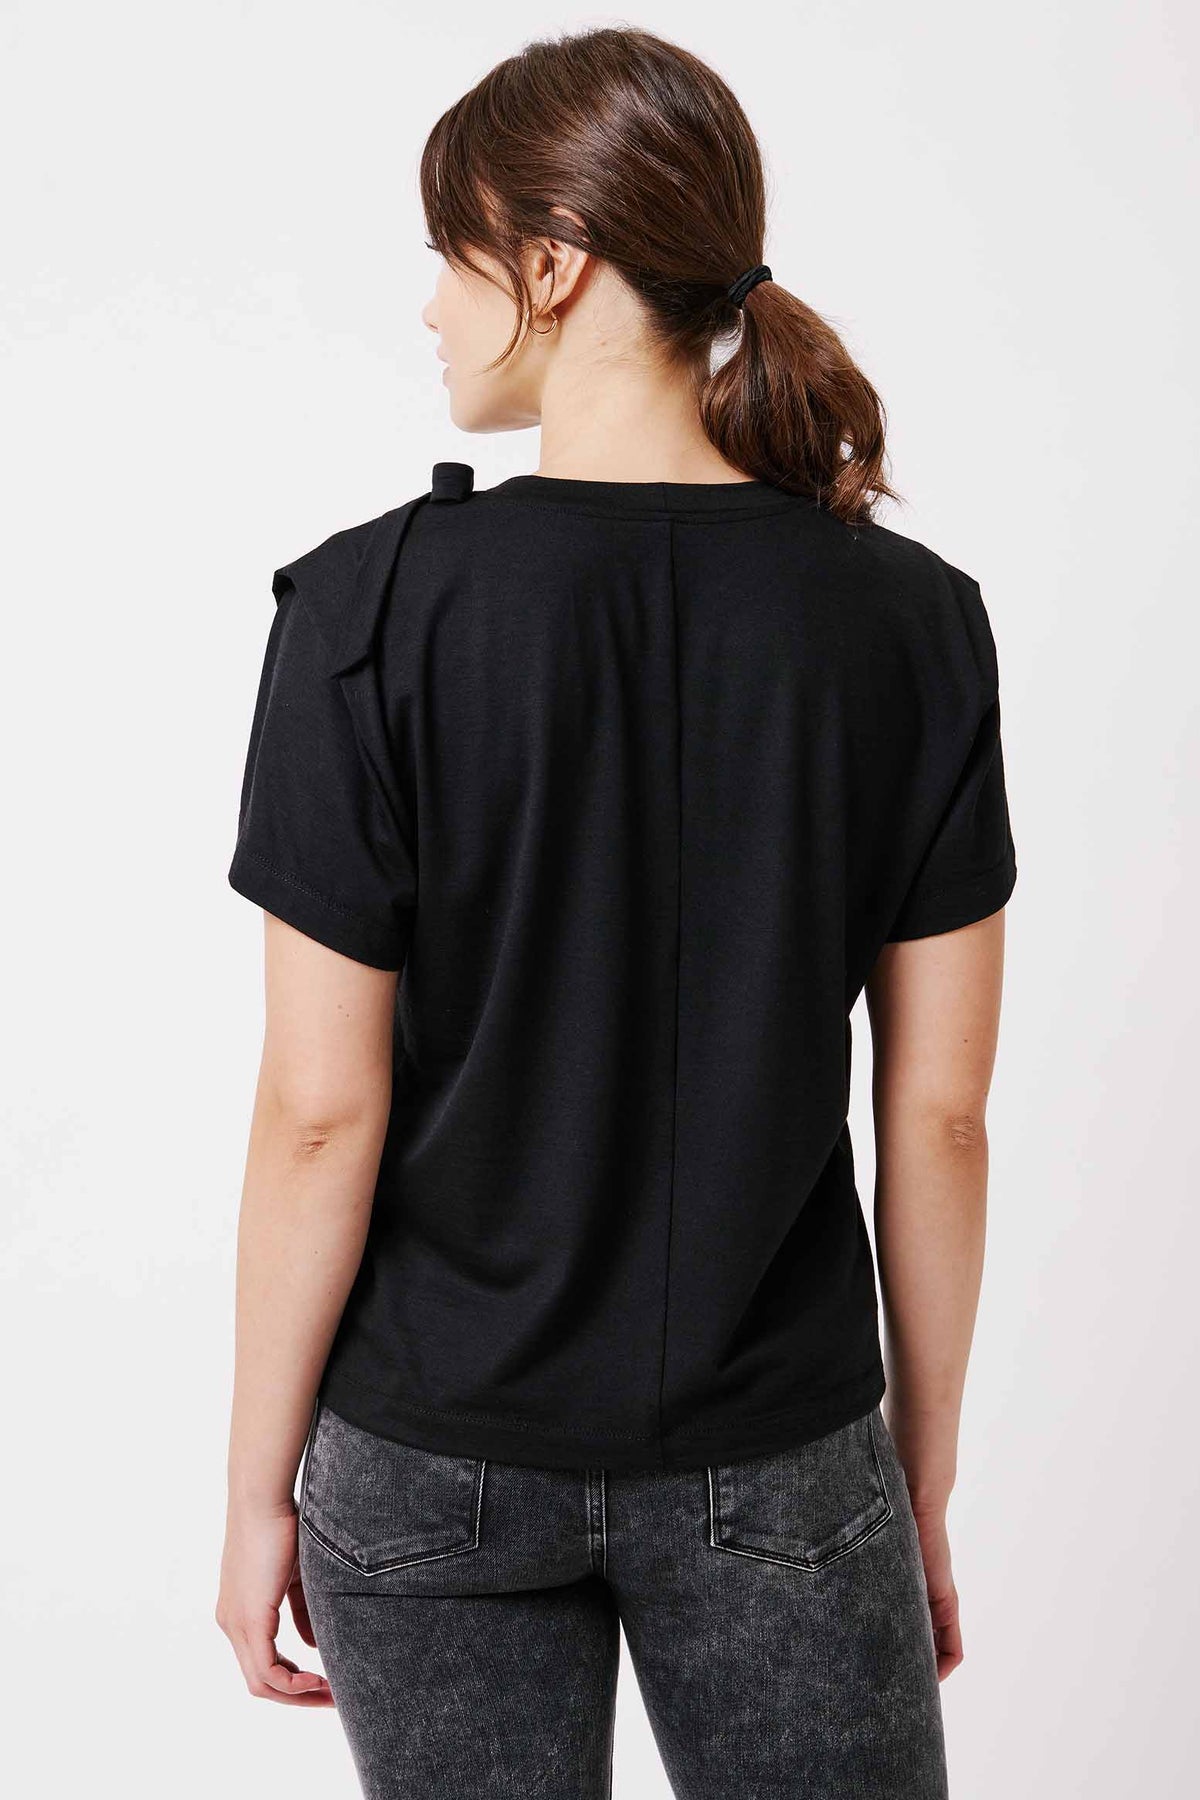 Gioia Cashmere Silk T-Shirt